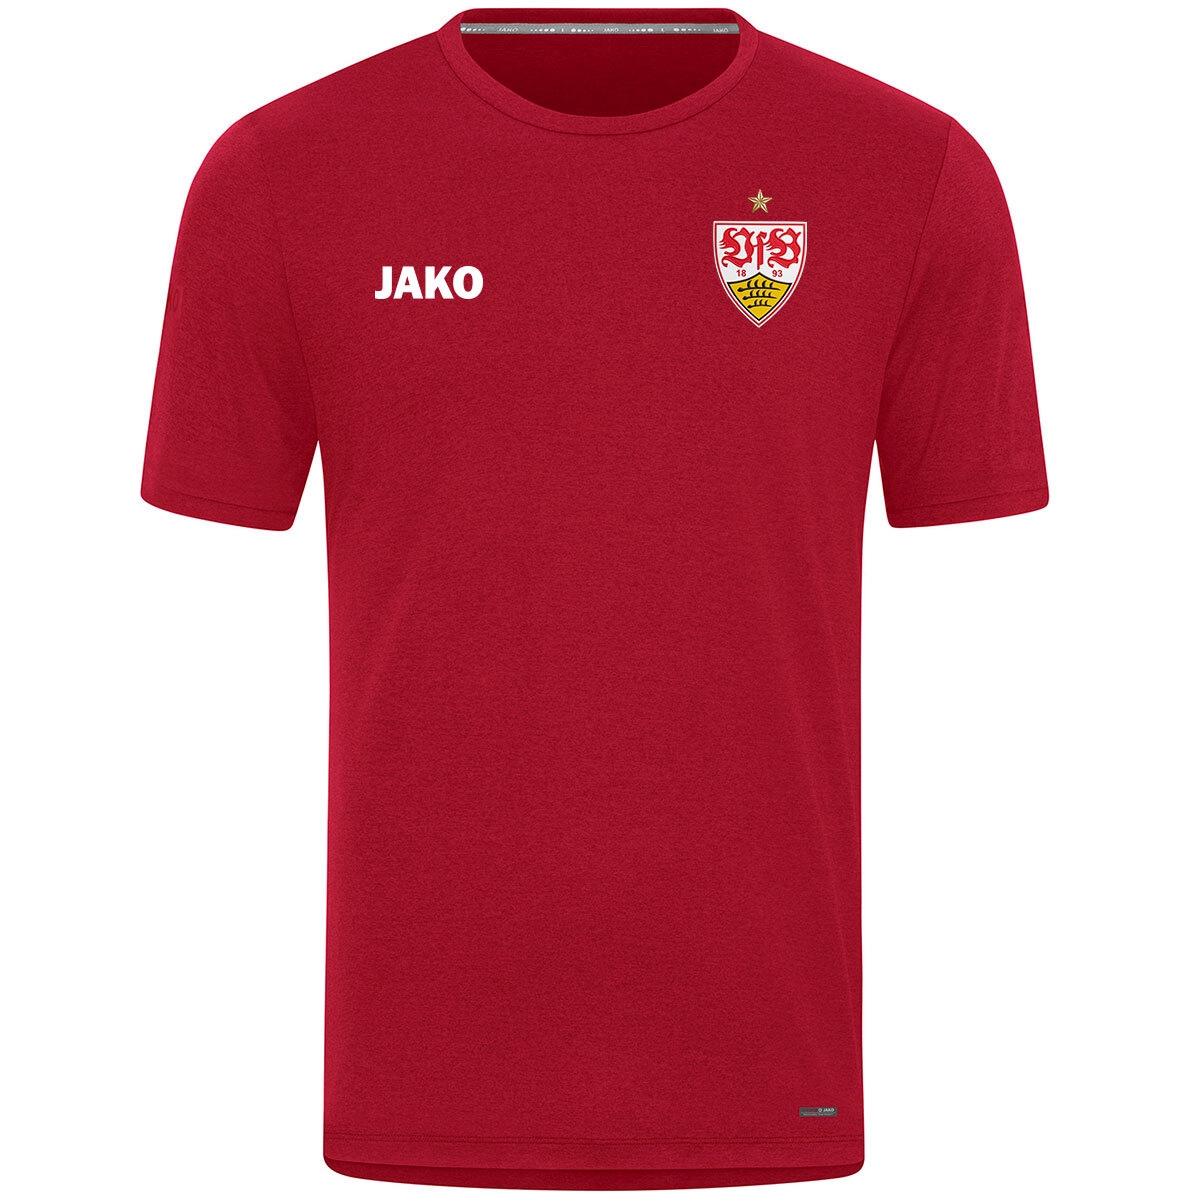 Jako VfB Stuttgart T-Shirt  Pro Casual